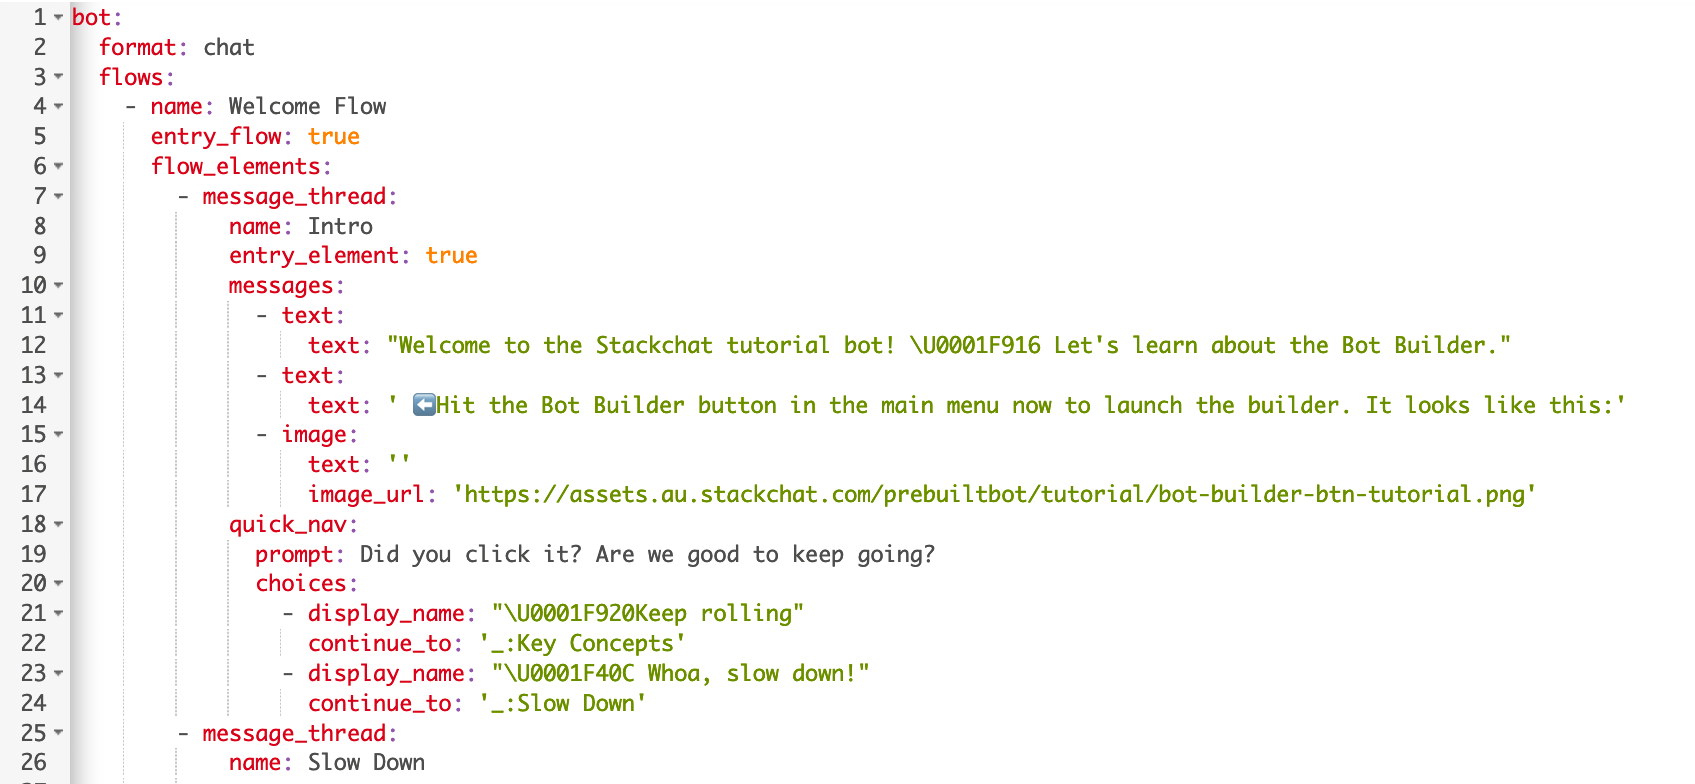 Sample CDML from the Stackchat Studio tutorial bot.